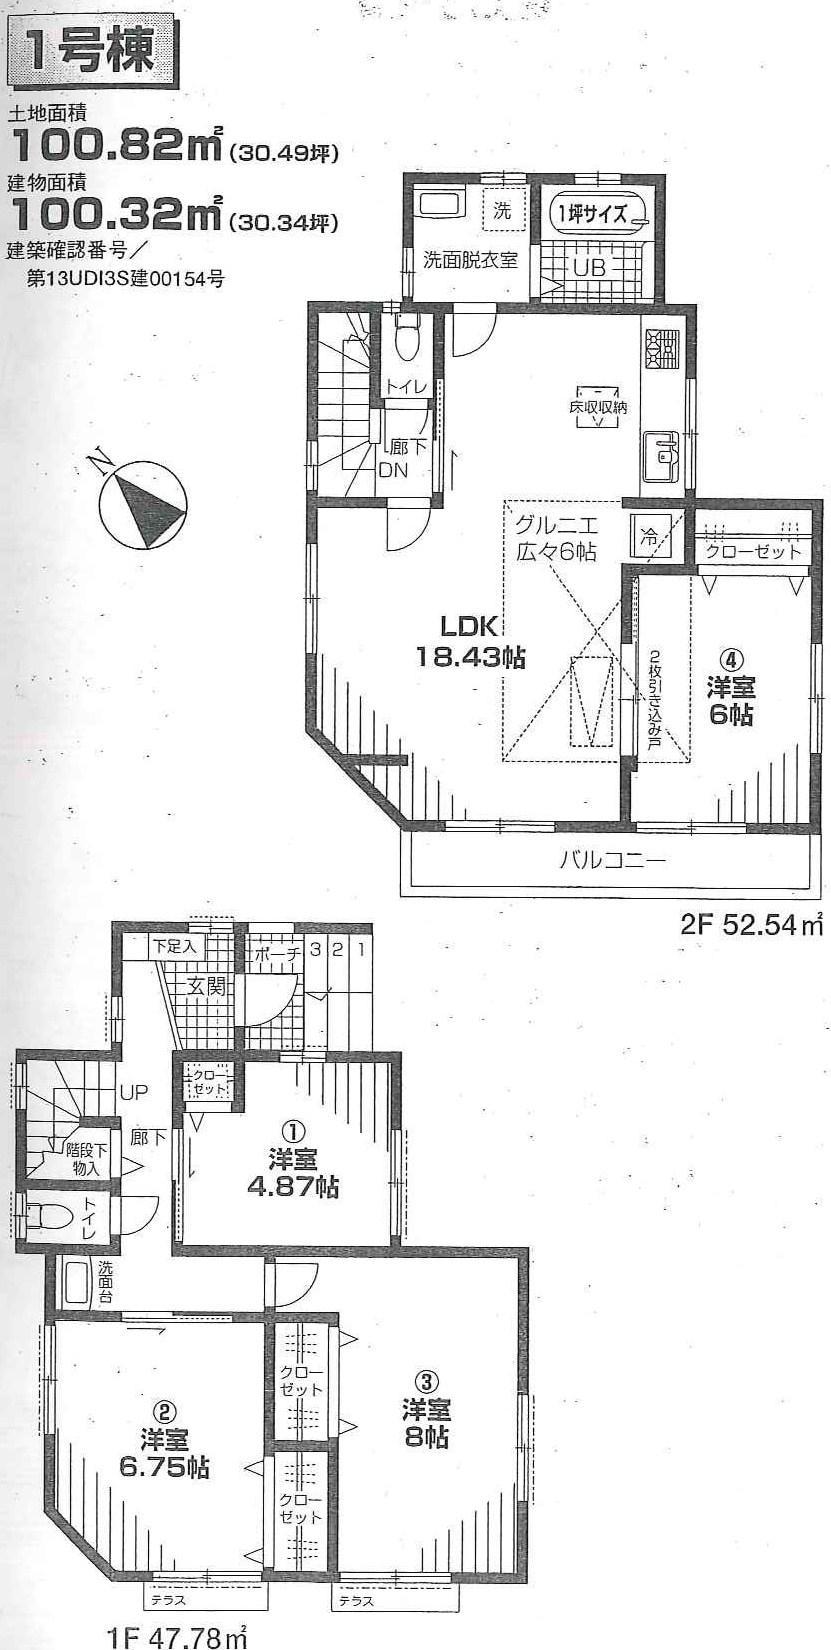 Floor plan. (1), Price 45,800,000 yen, 4LDK, Land area 100.82 sq m , Building area 100.32 sq m